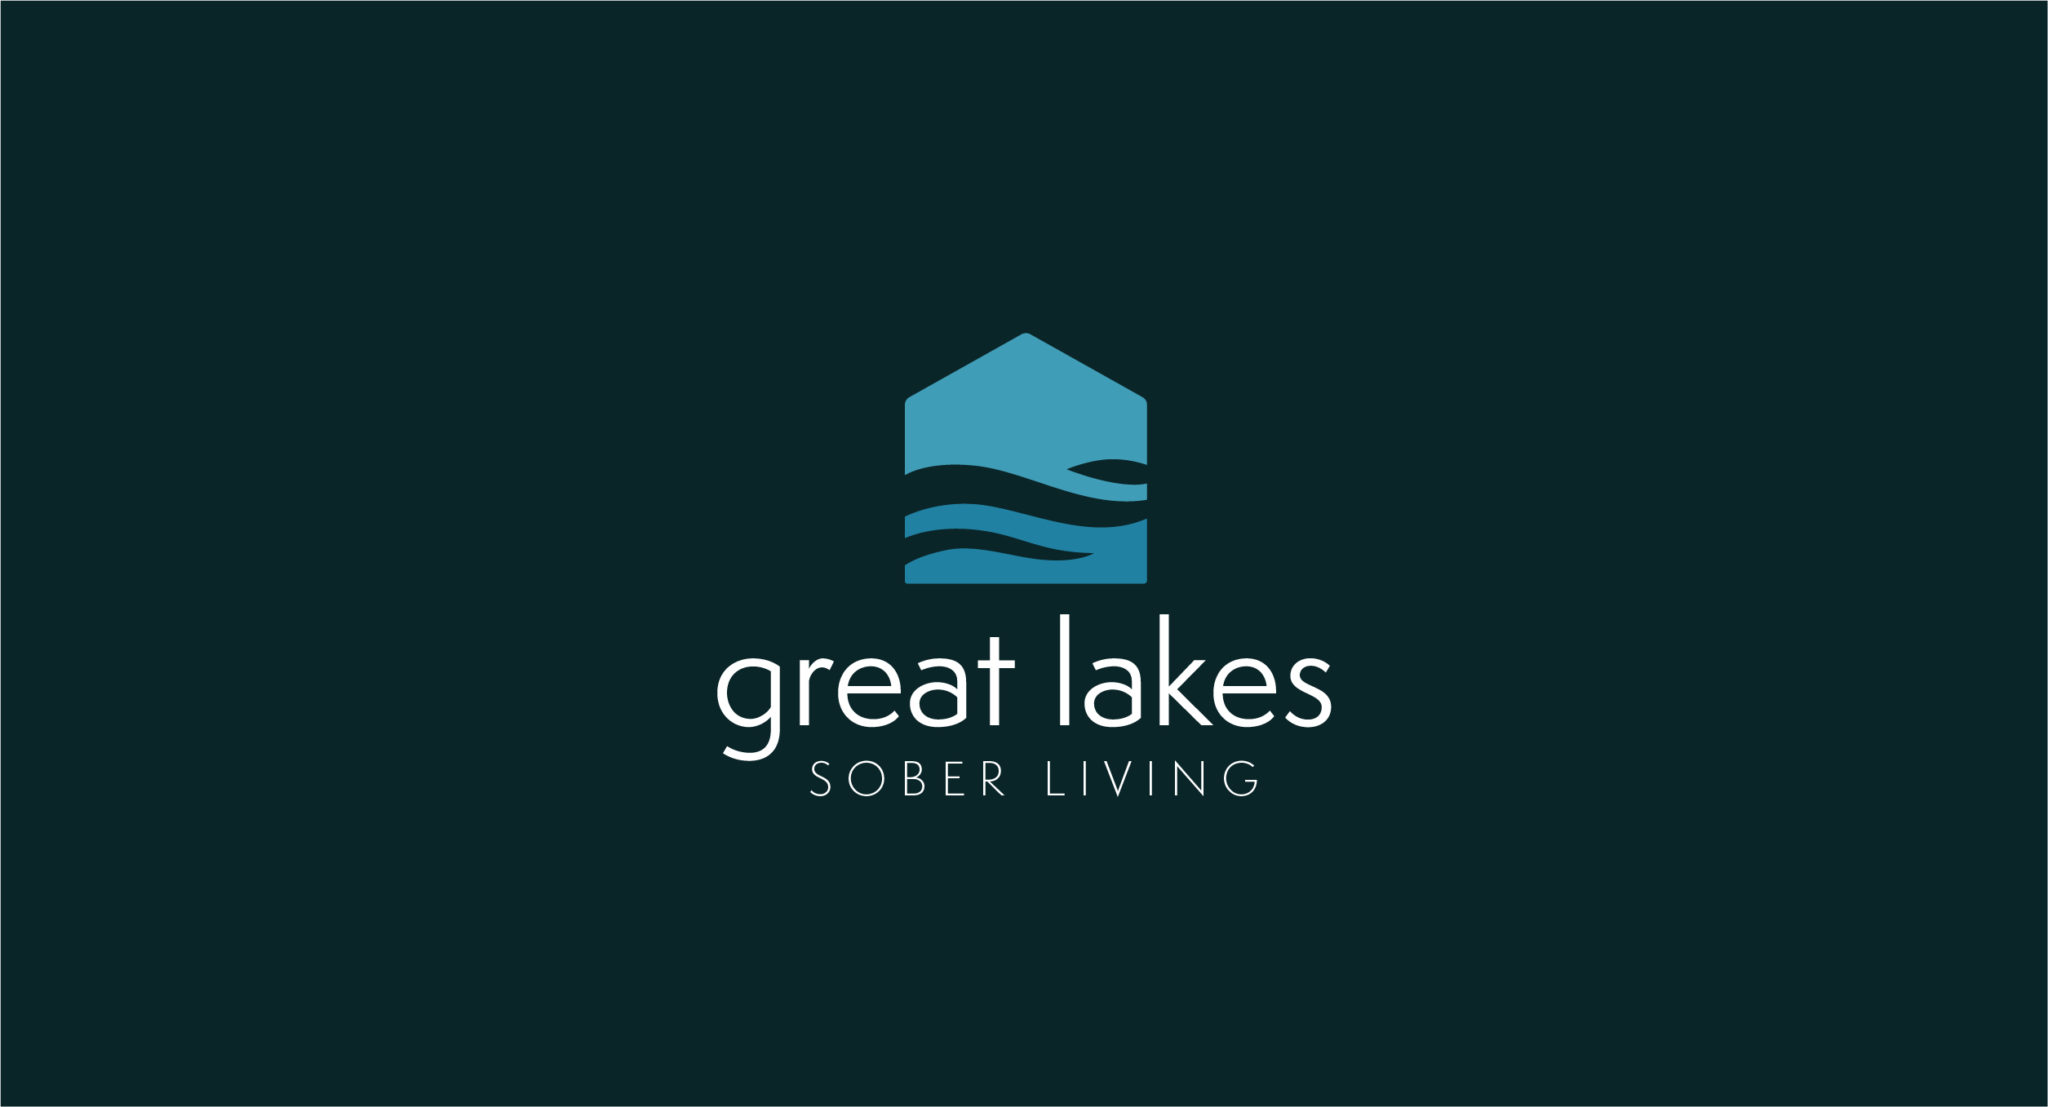 Great Lakes Sober Living logo design, created by Šek Design Studio